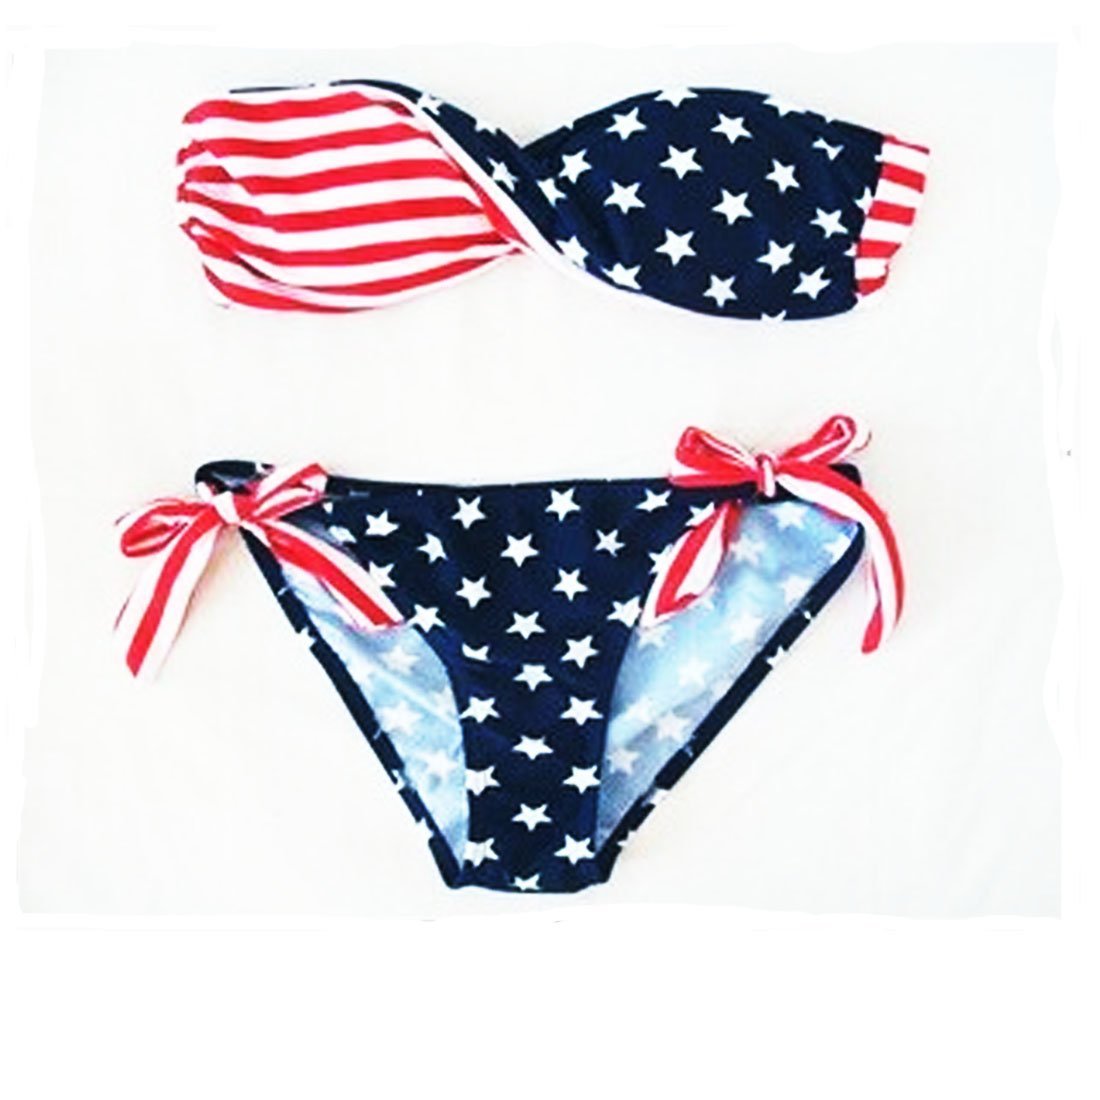 Kredy shopping: USA Stars and Stripes Bikini, 2016 Newest Fashion Women ...